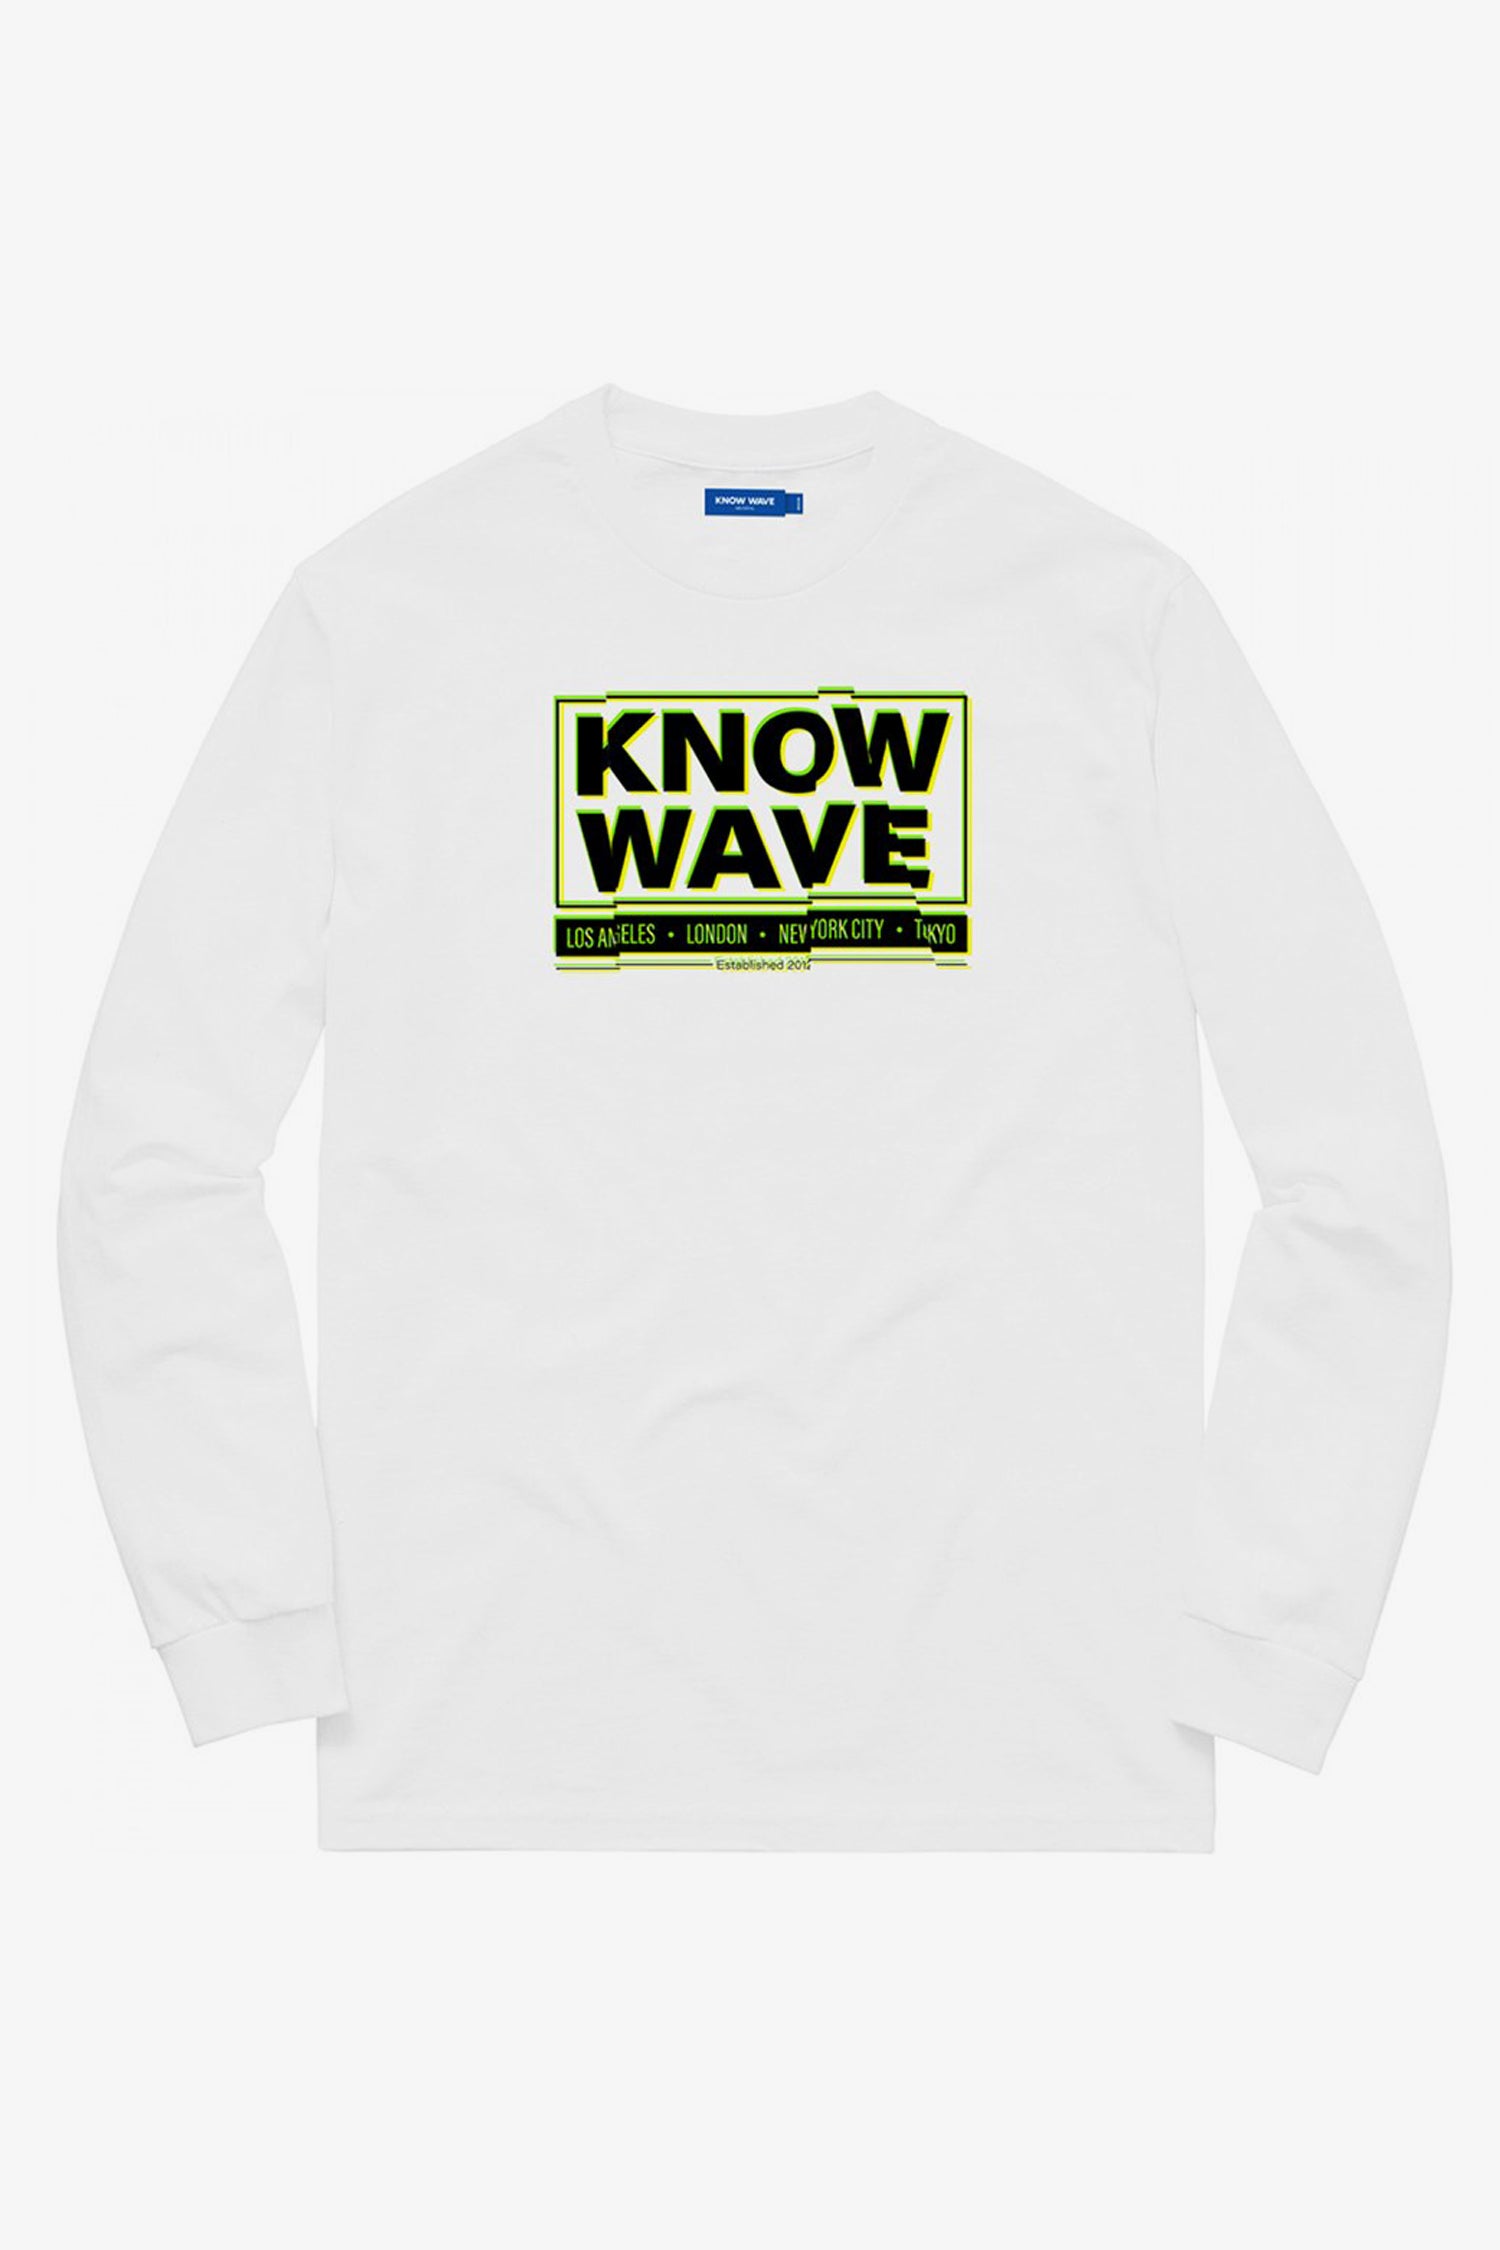 Selectshop FRAME - KNOW WAVE Chop It Up Longsleeve T-Shirt Dubai